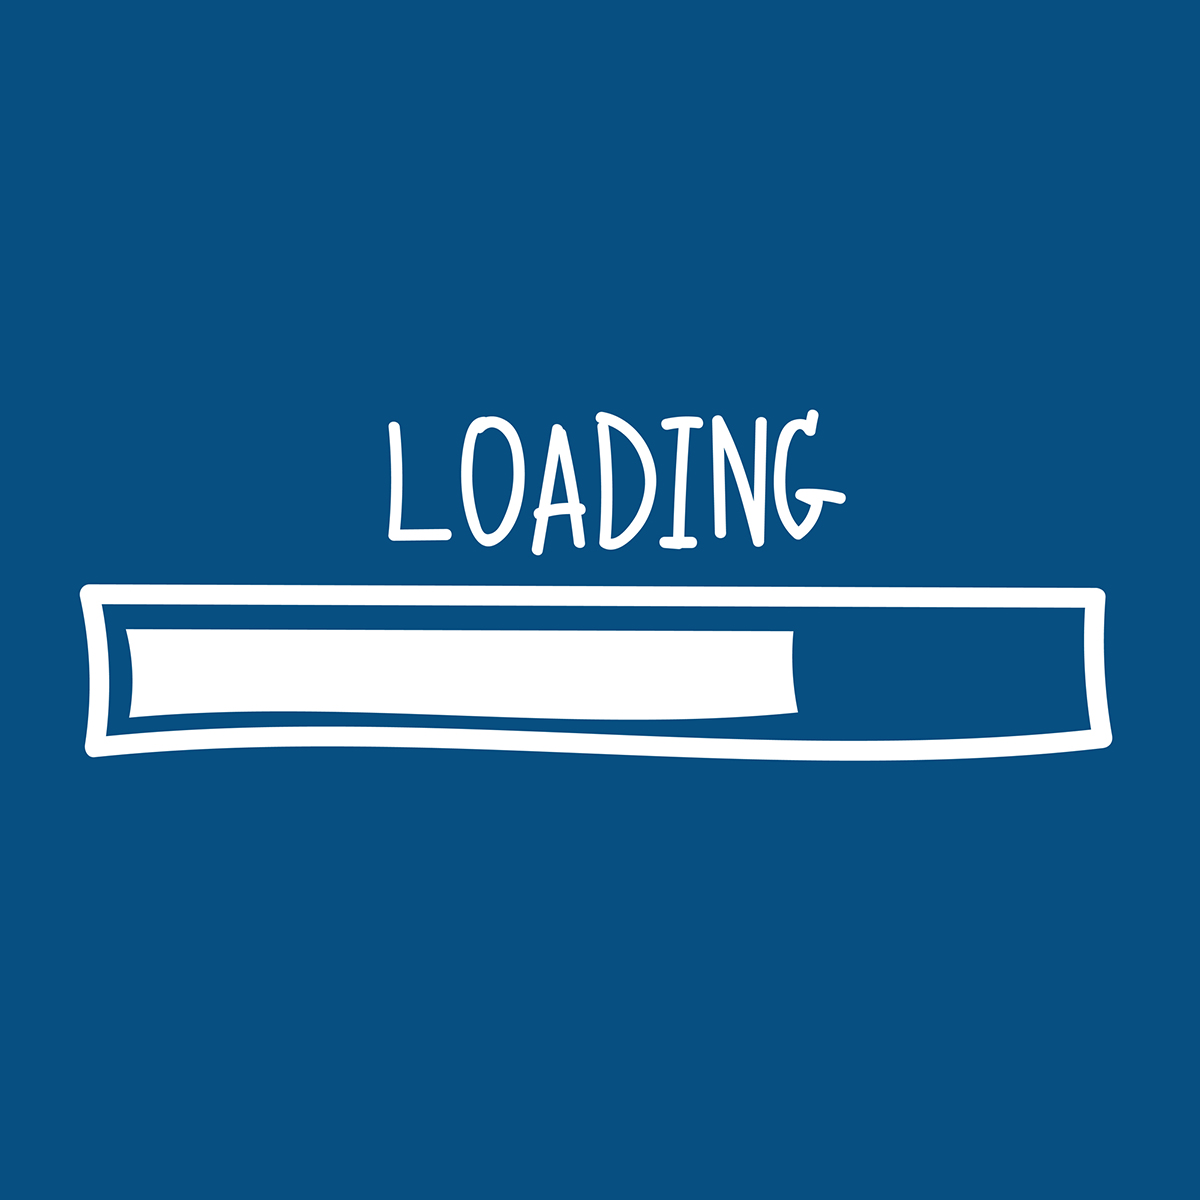 Trim website load time: webpage loading progress bar at about 75%.